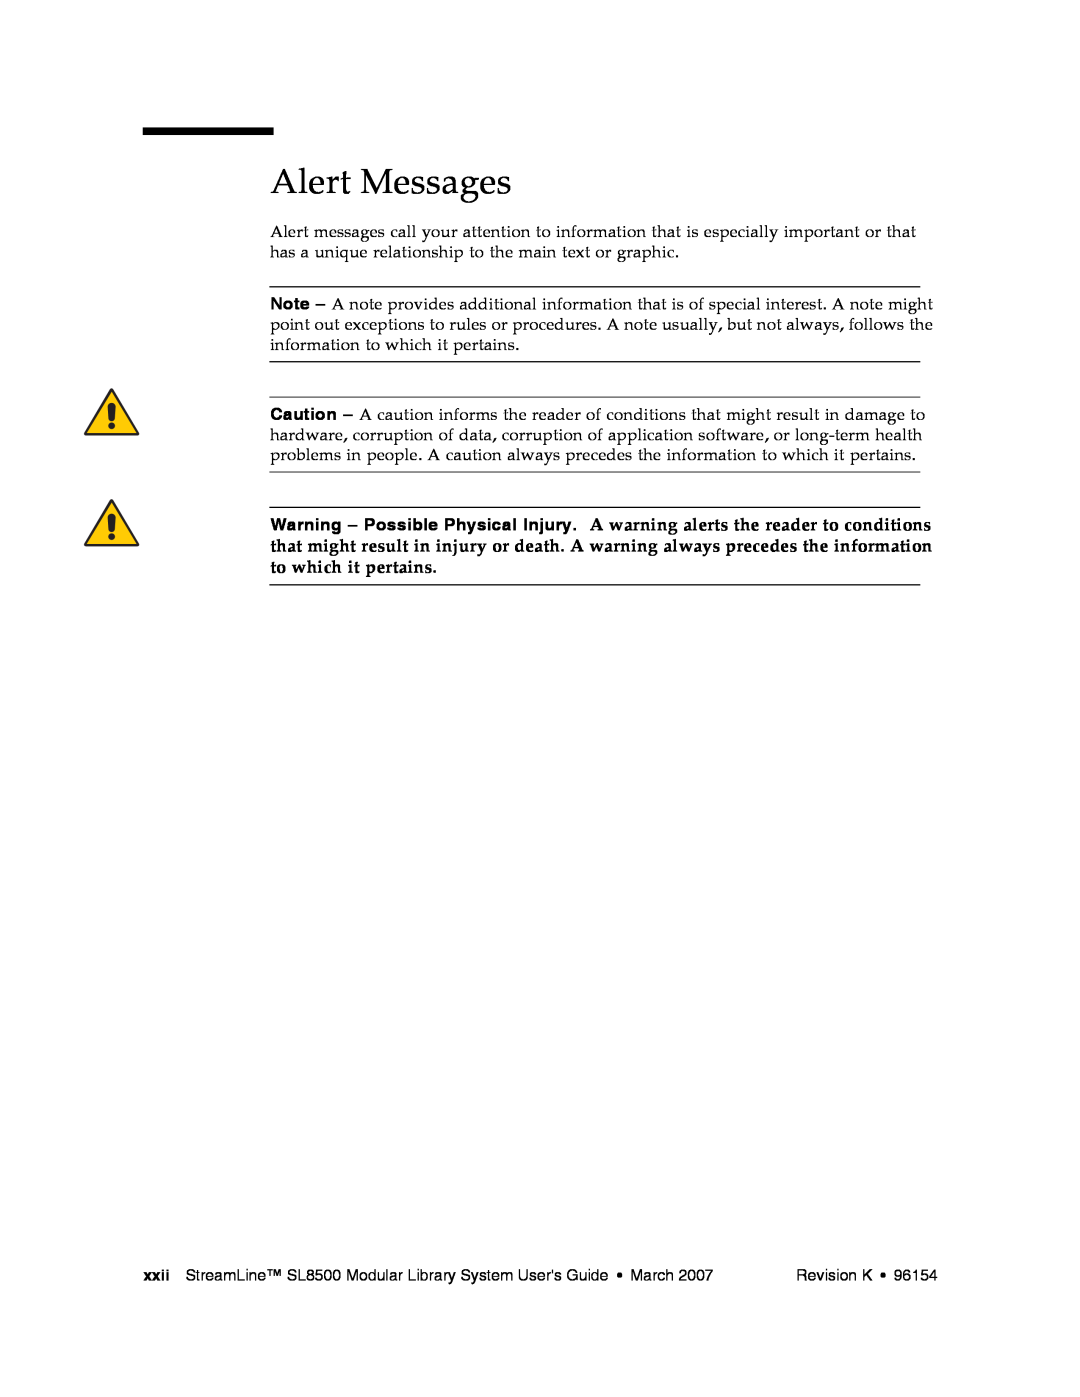 Sun Microsystems SL8500 manual Alert Messages 